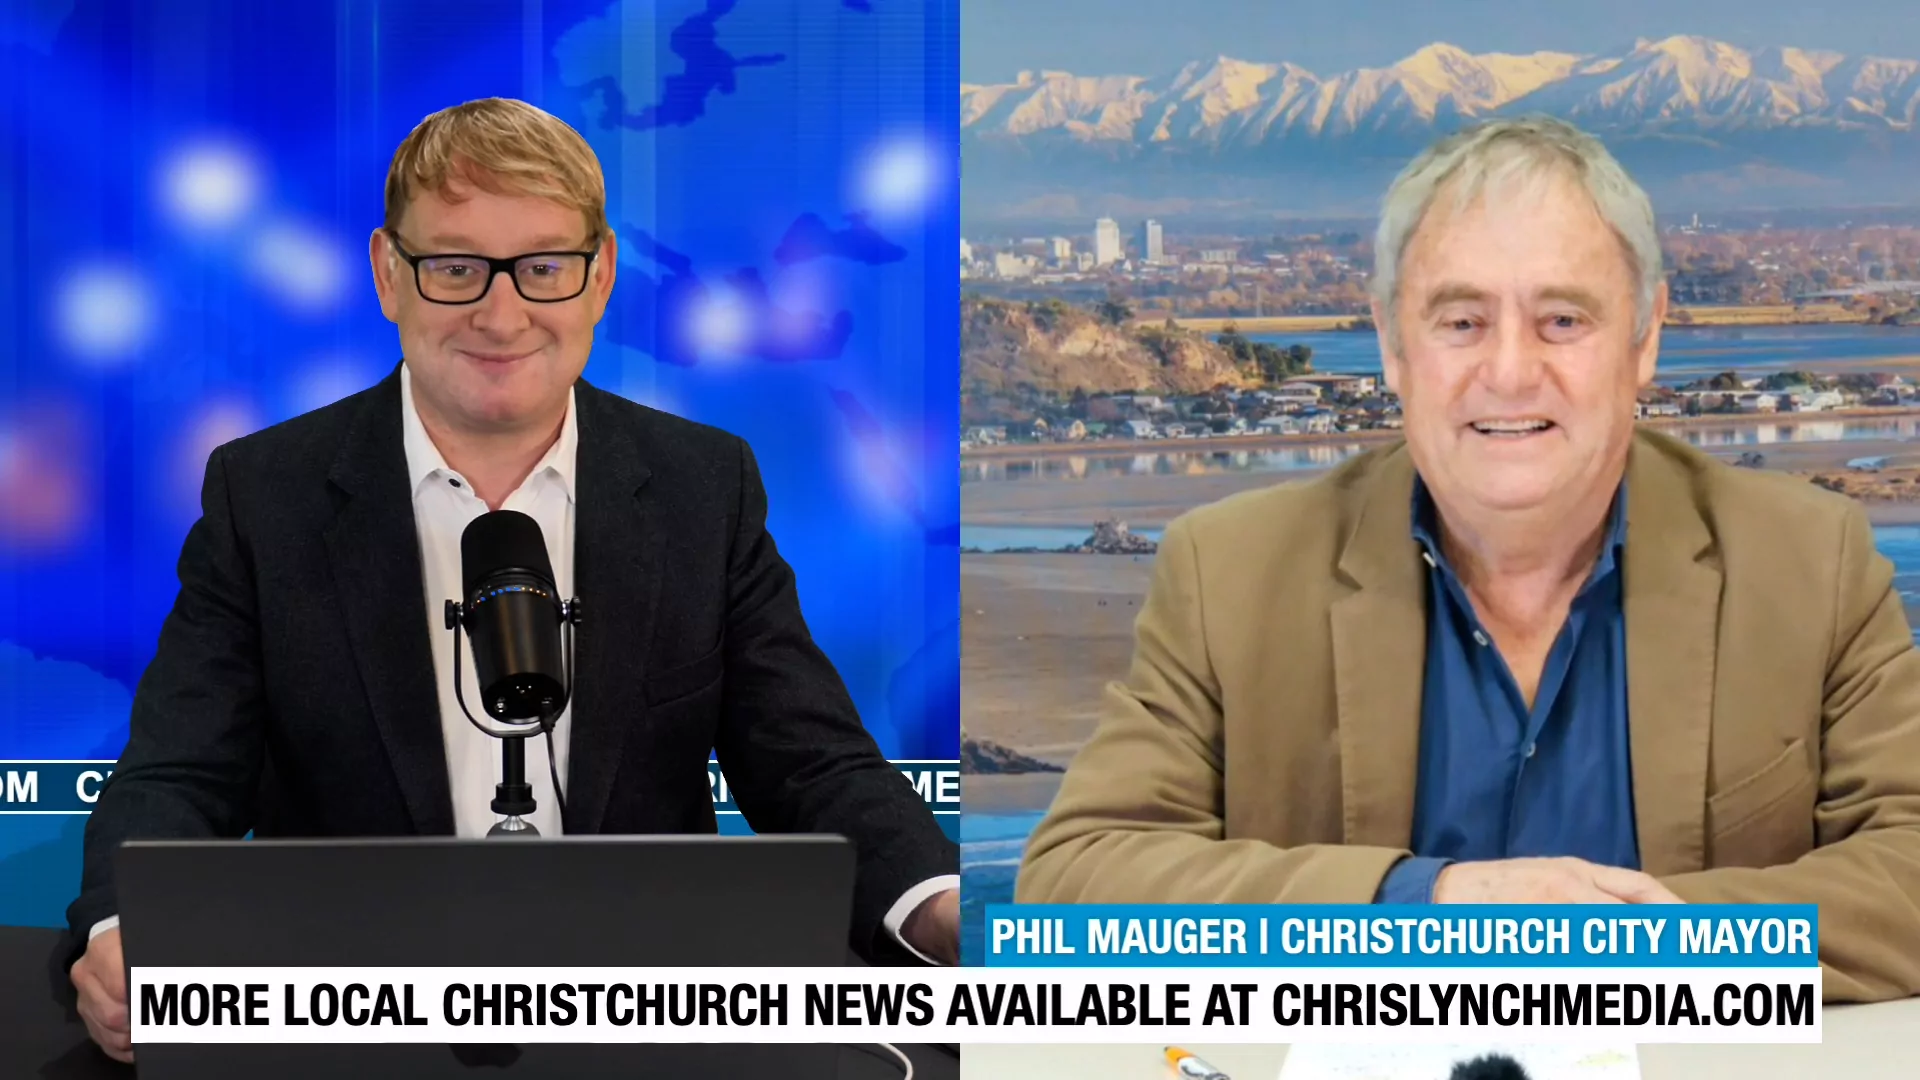 Mayor Phil Mauger backs proposal for NRL Team in Christchurch